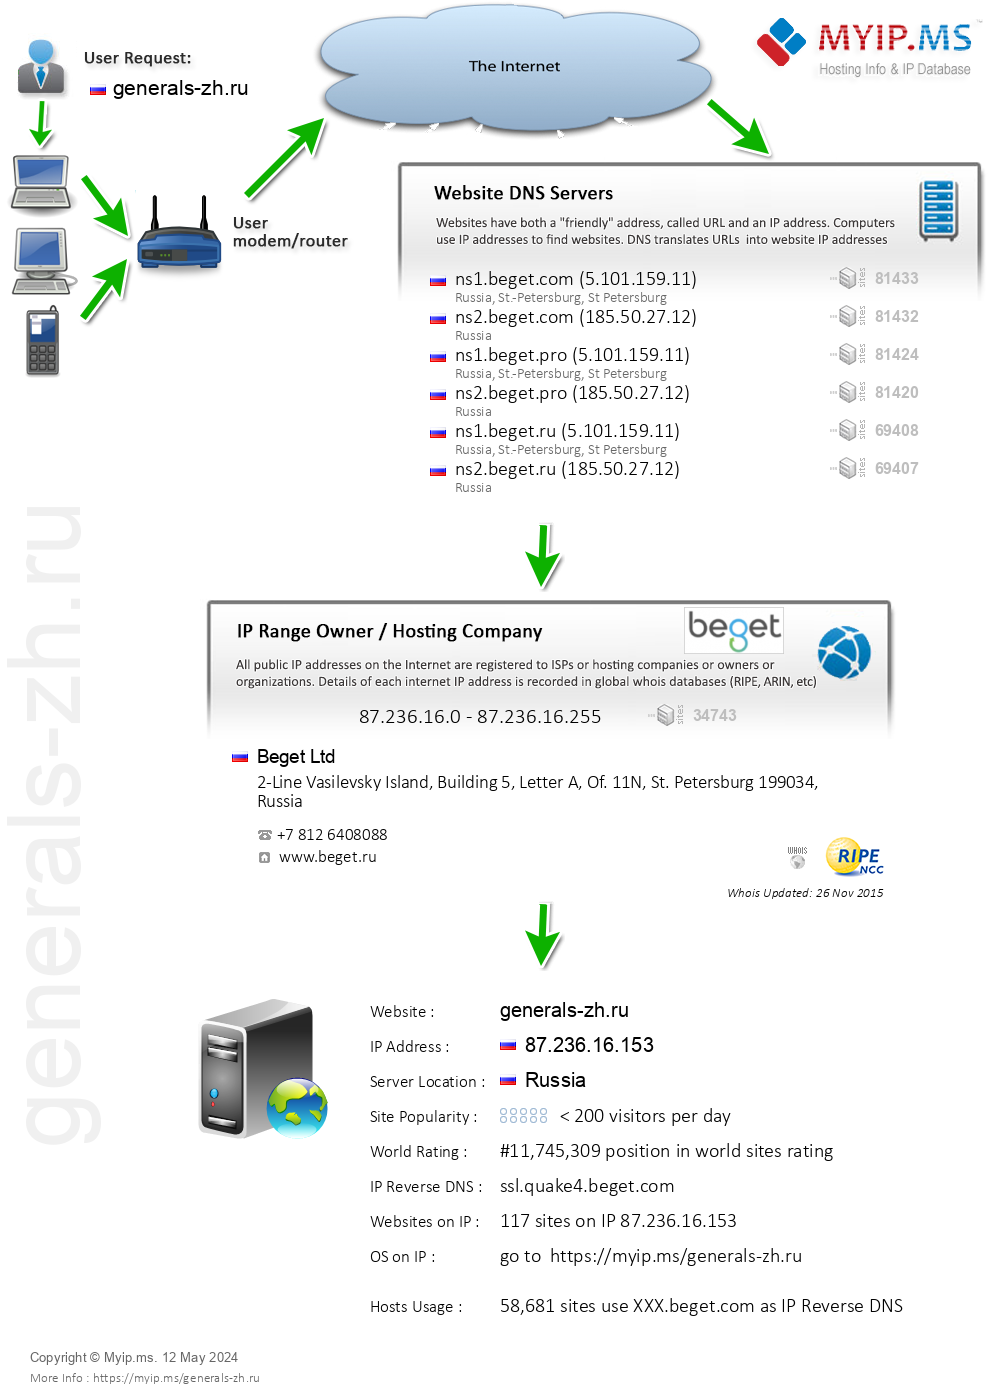 Generals-zh.ru - Website Hosting Visual IP Diagram